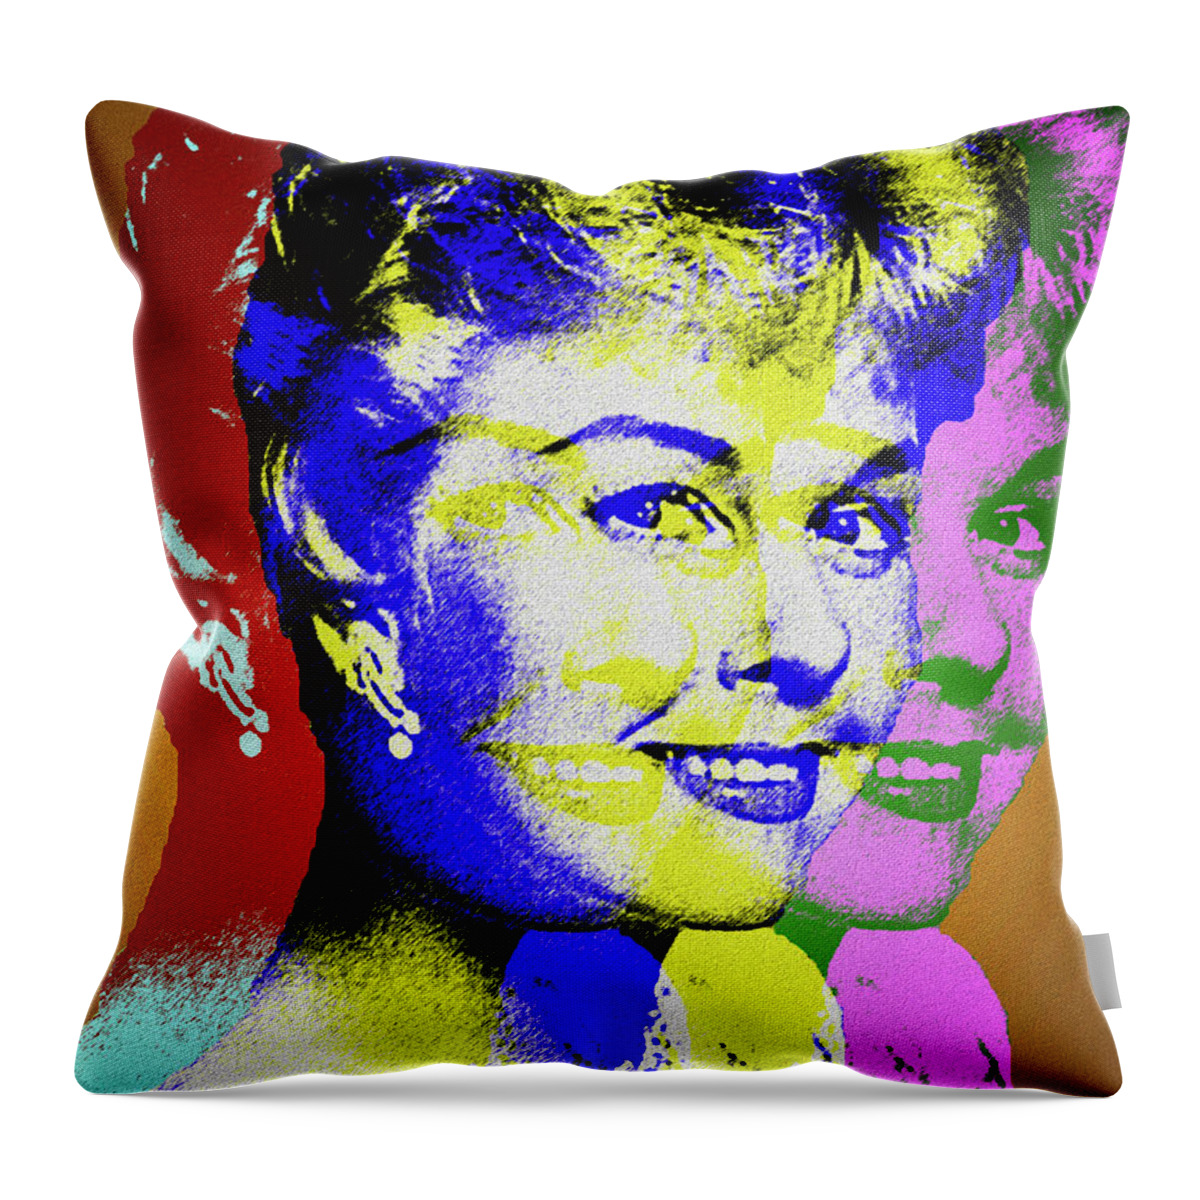 Doris Day Throw Pillow featuring the digital art Doris Day by Stars on Art